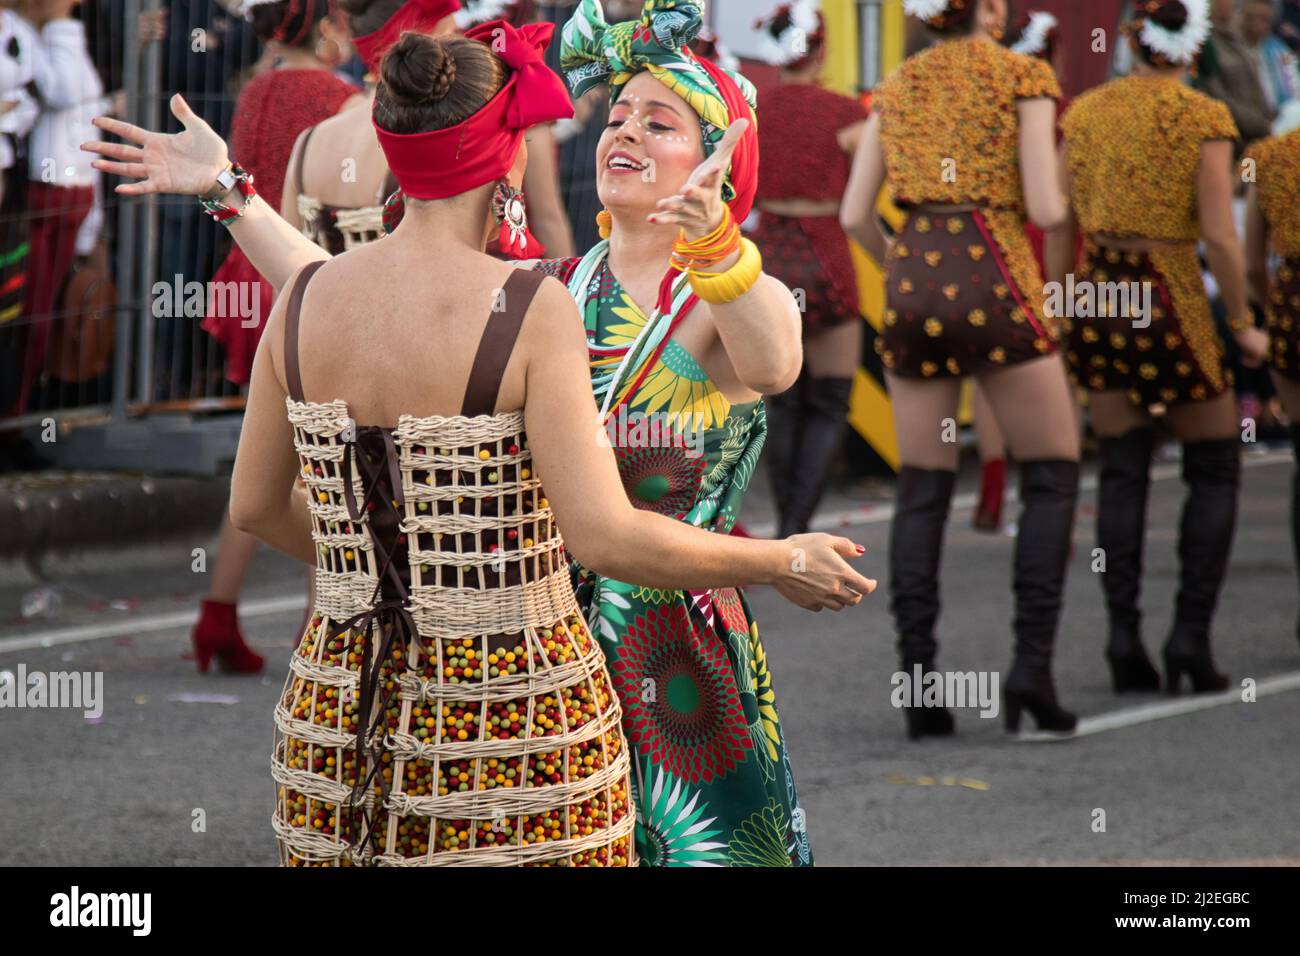 Two masqueraders greeting each other - Ovar, Grande Desfile. Big Parade. Palachinas, Rota do Café, The Coffee Road Stock Photo